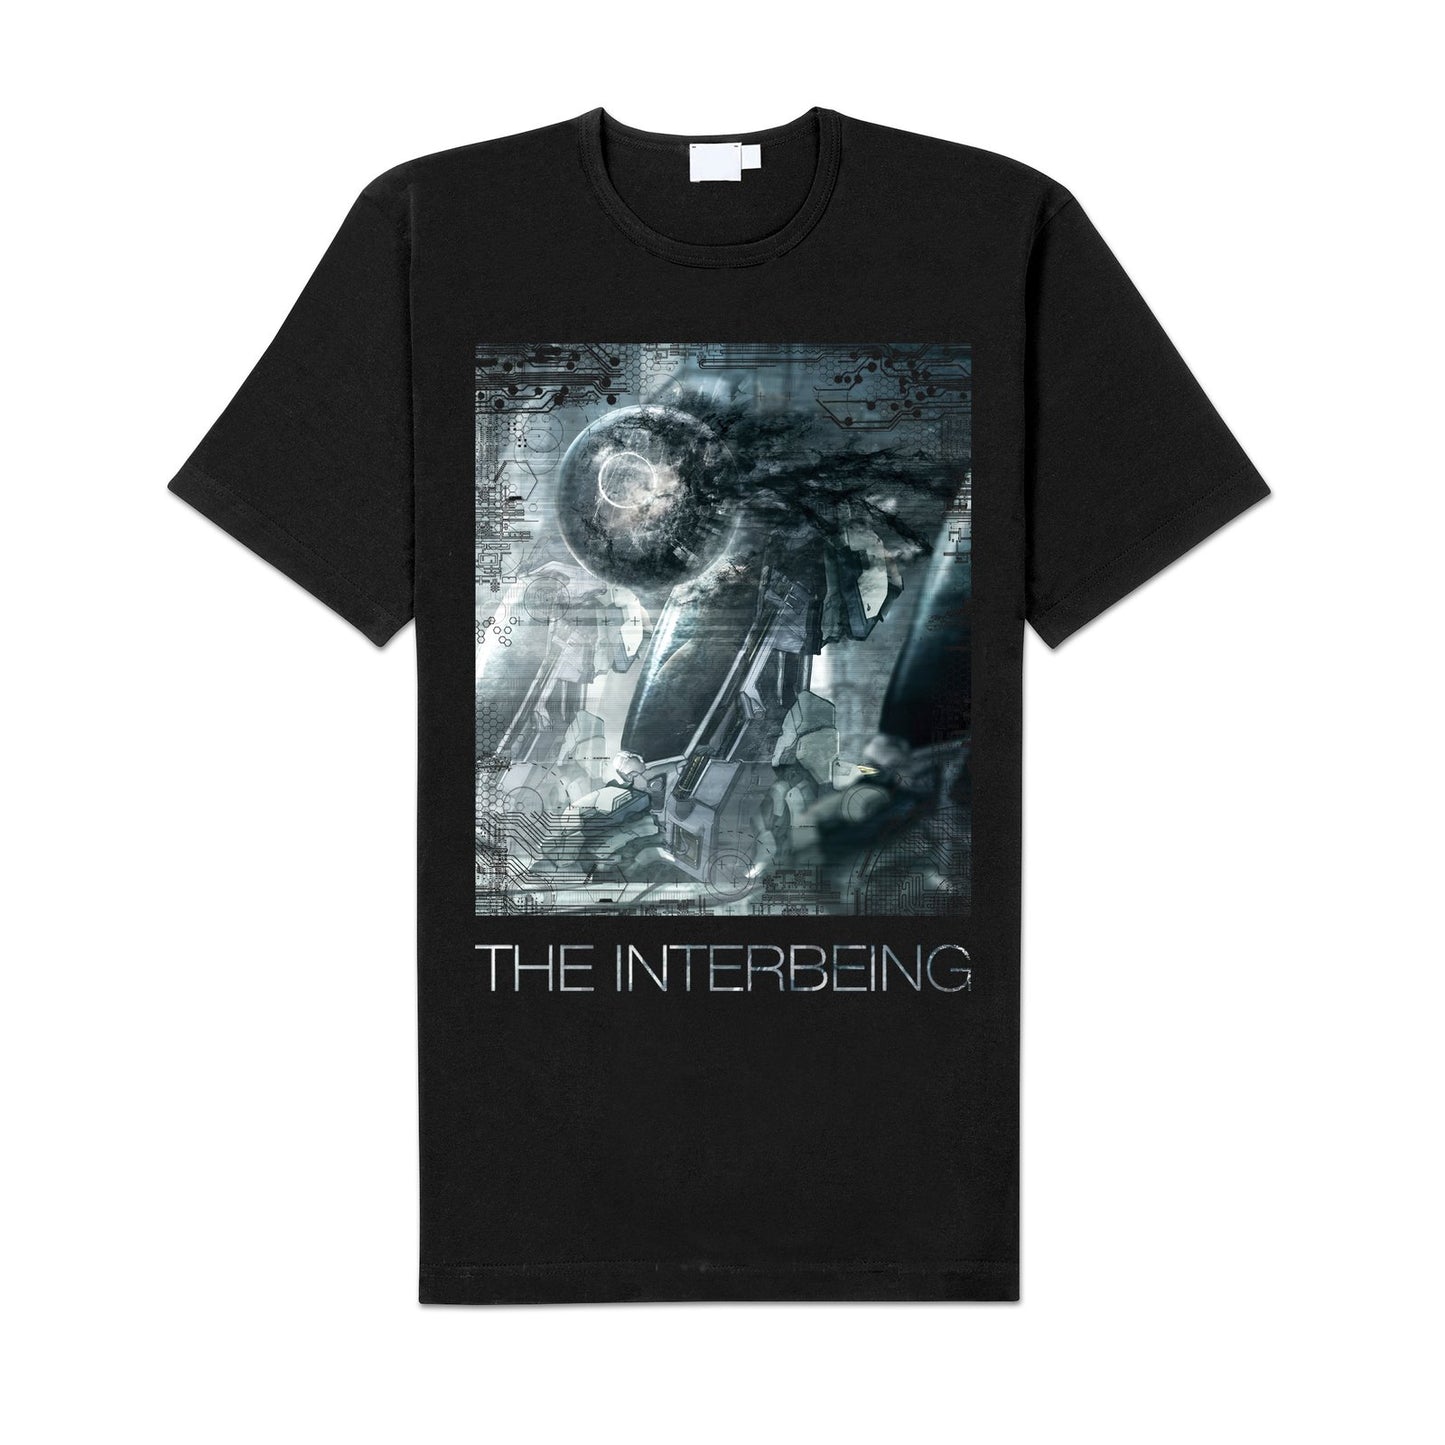 The Interbeing "Mechanix" Shirt